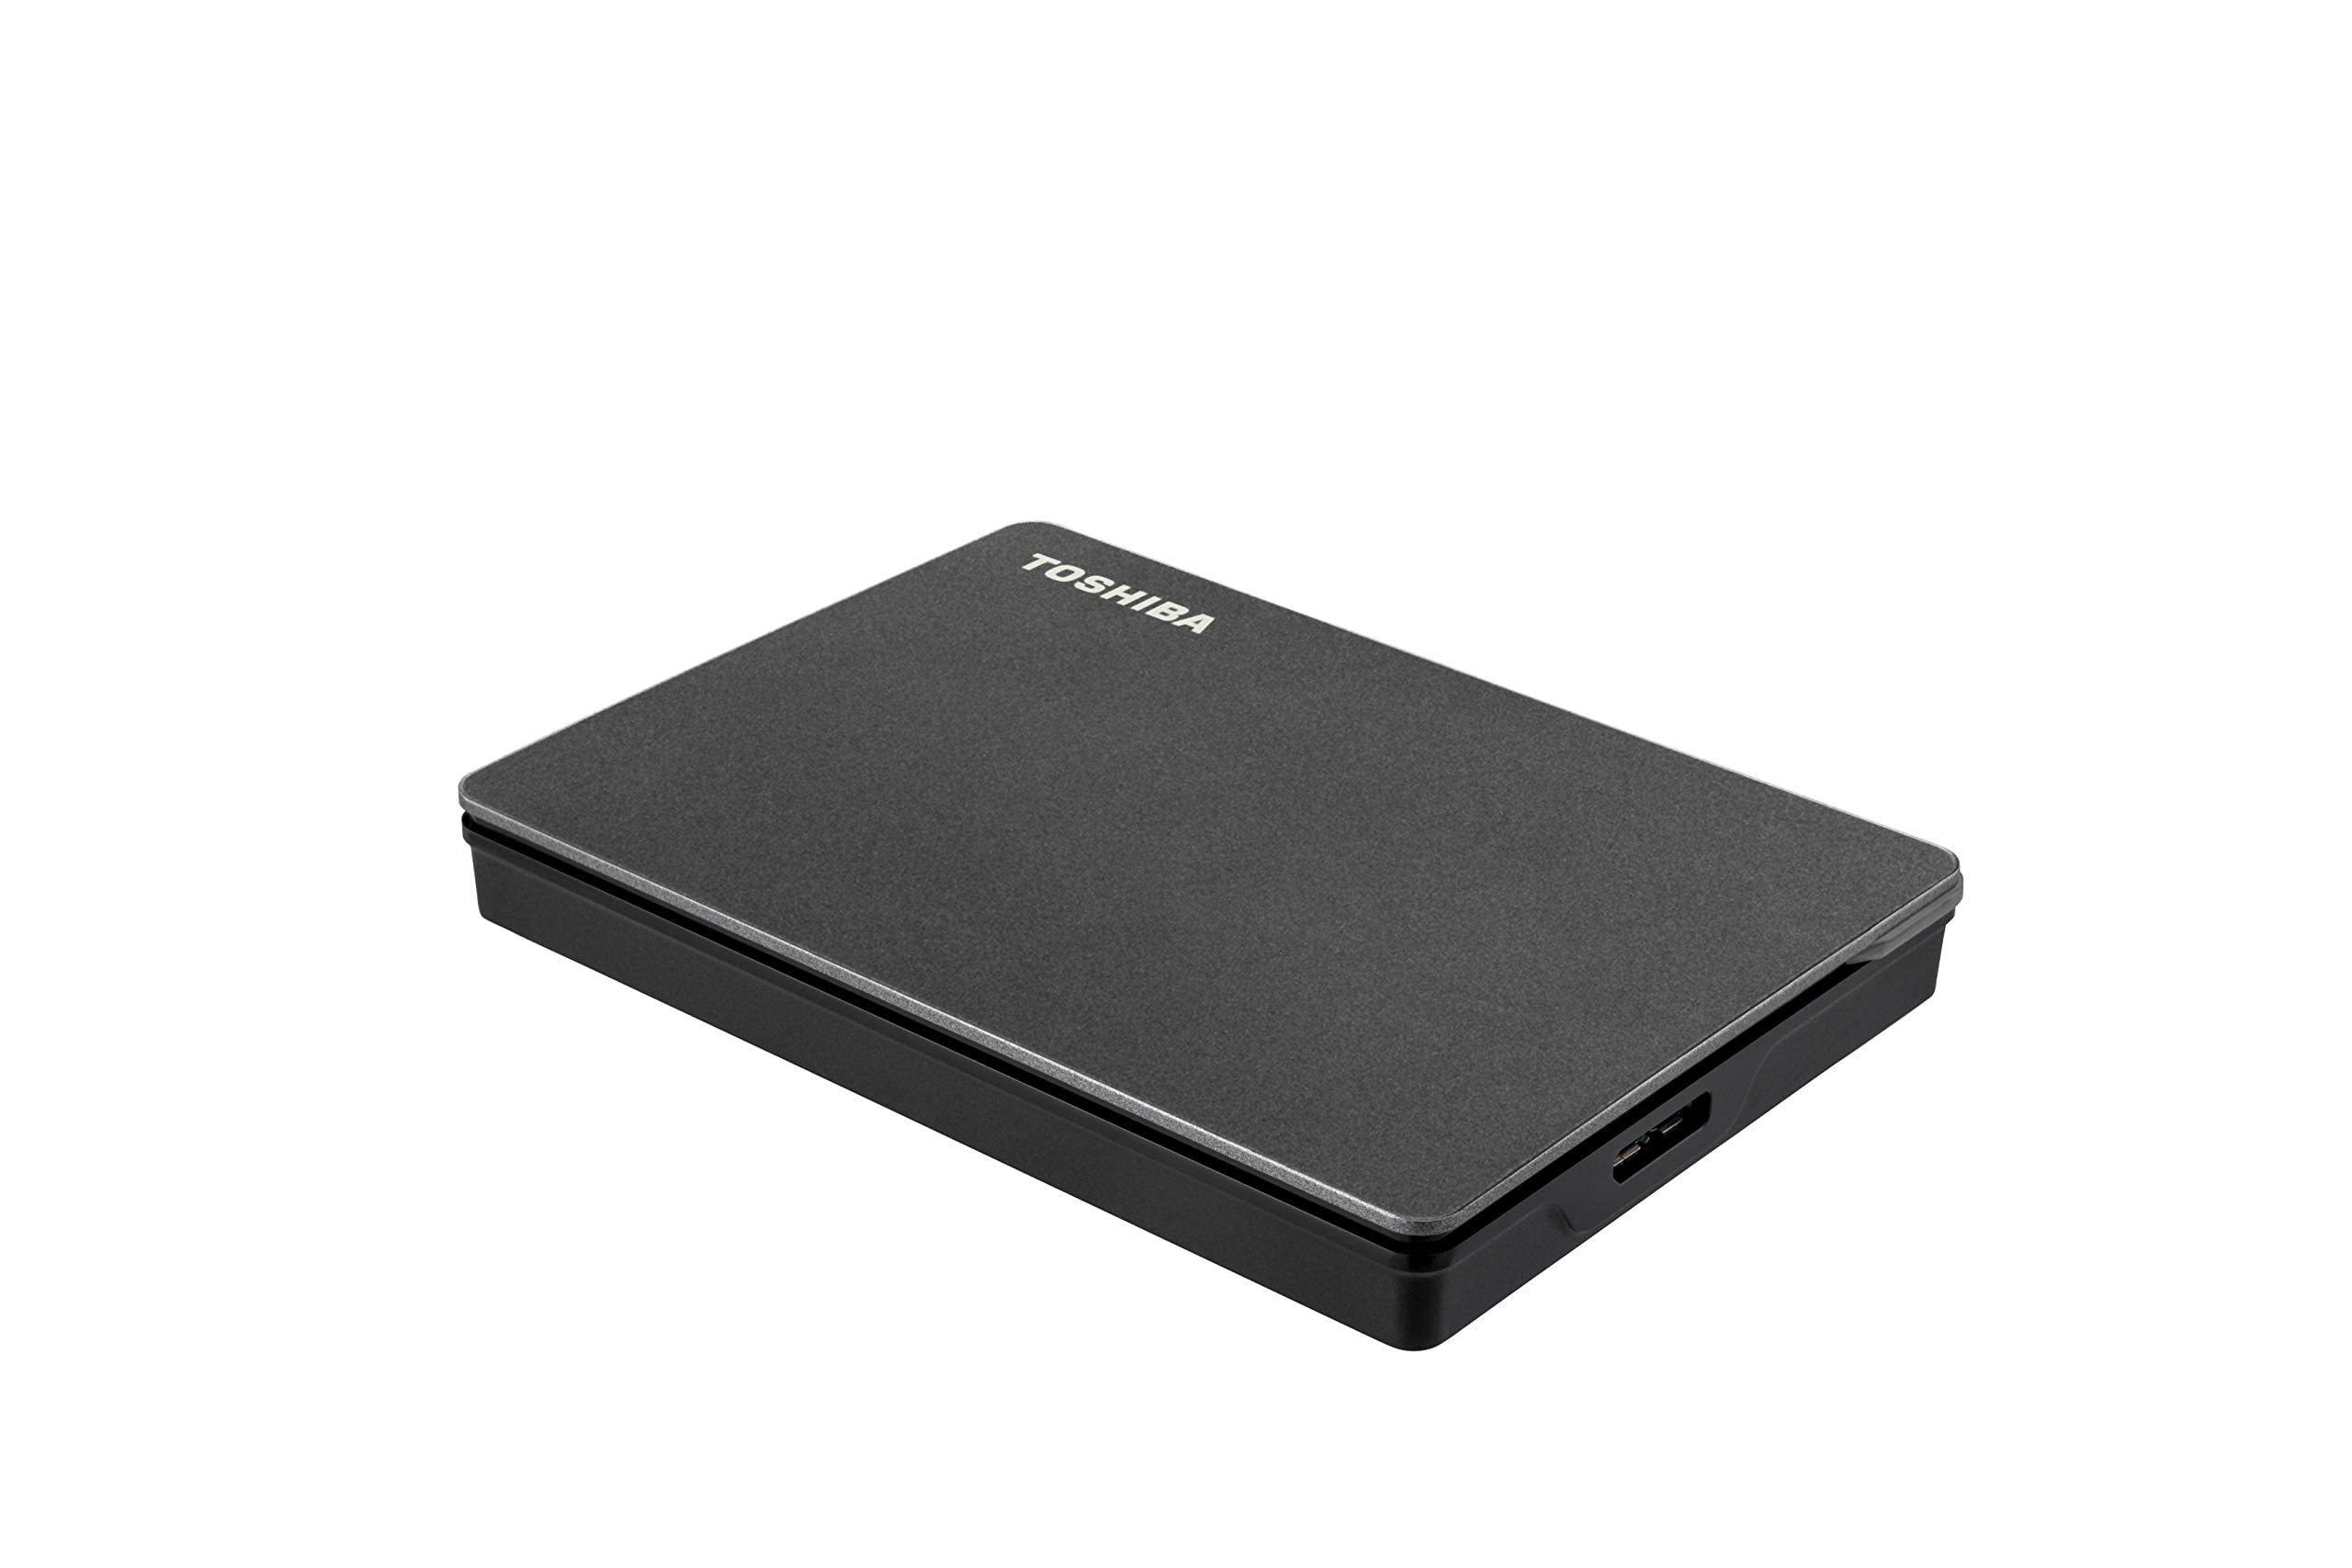 Toshiba Canvio Gaming 1TB Portable External Hard Drive USB 3.0, Black for PlayStation, Xbox, PC, & Mac - HDTX110XK3AA